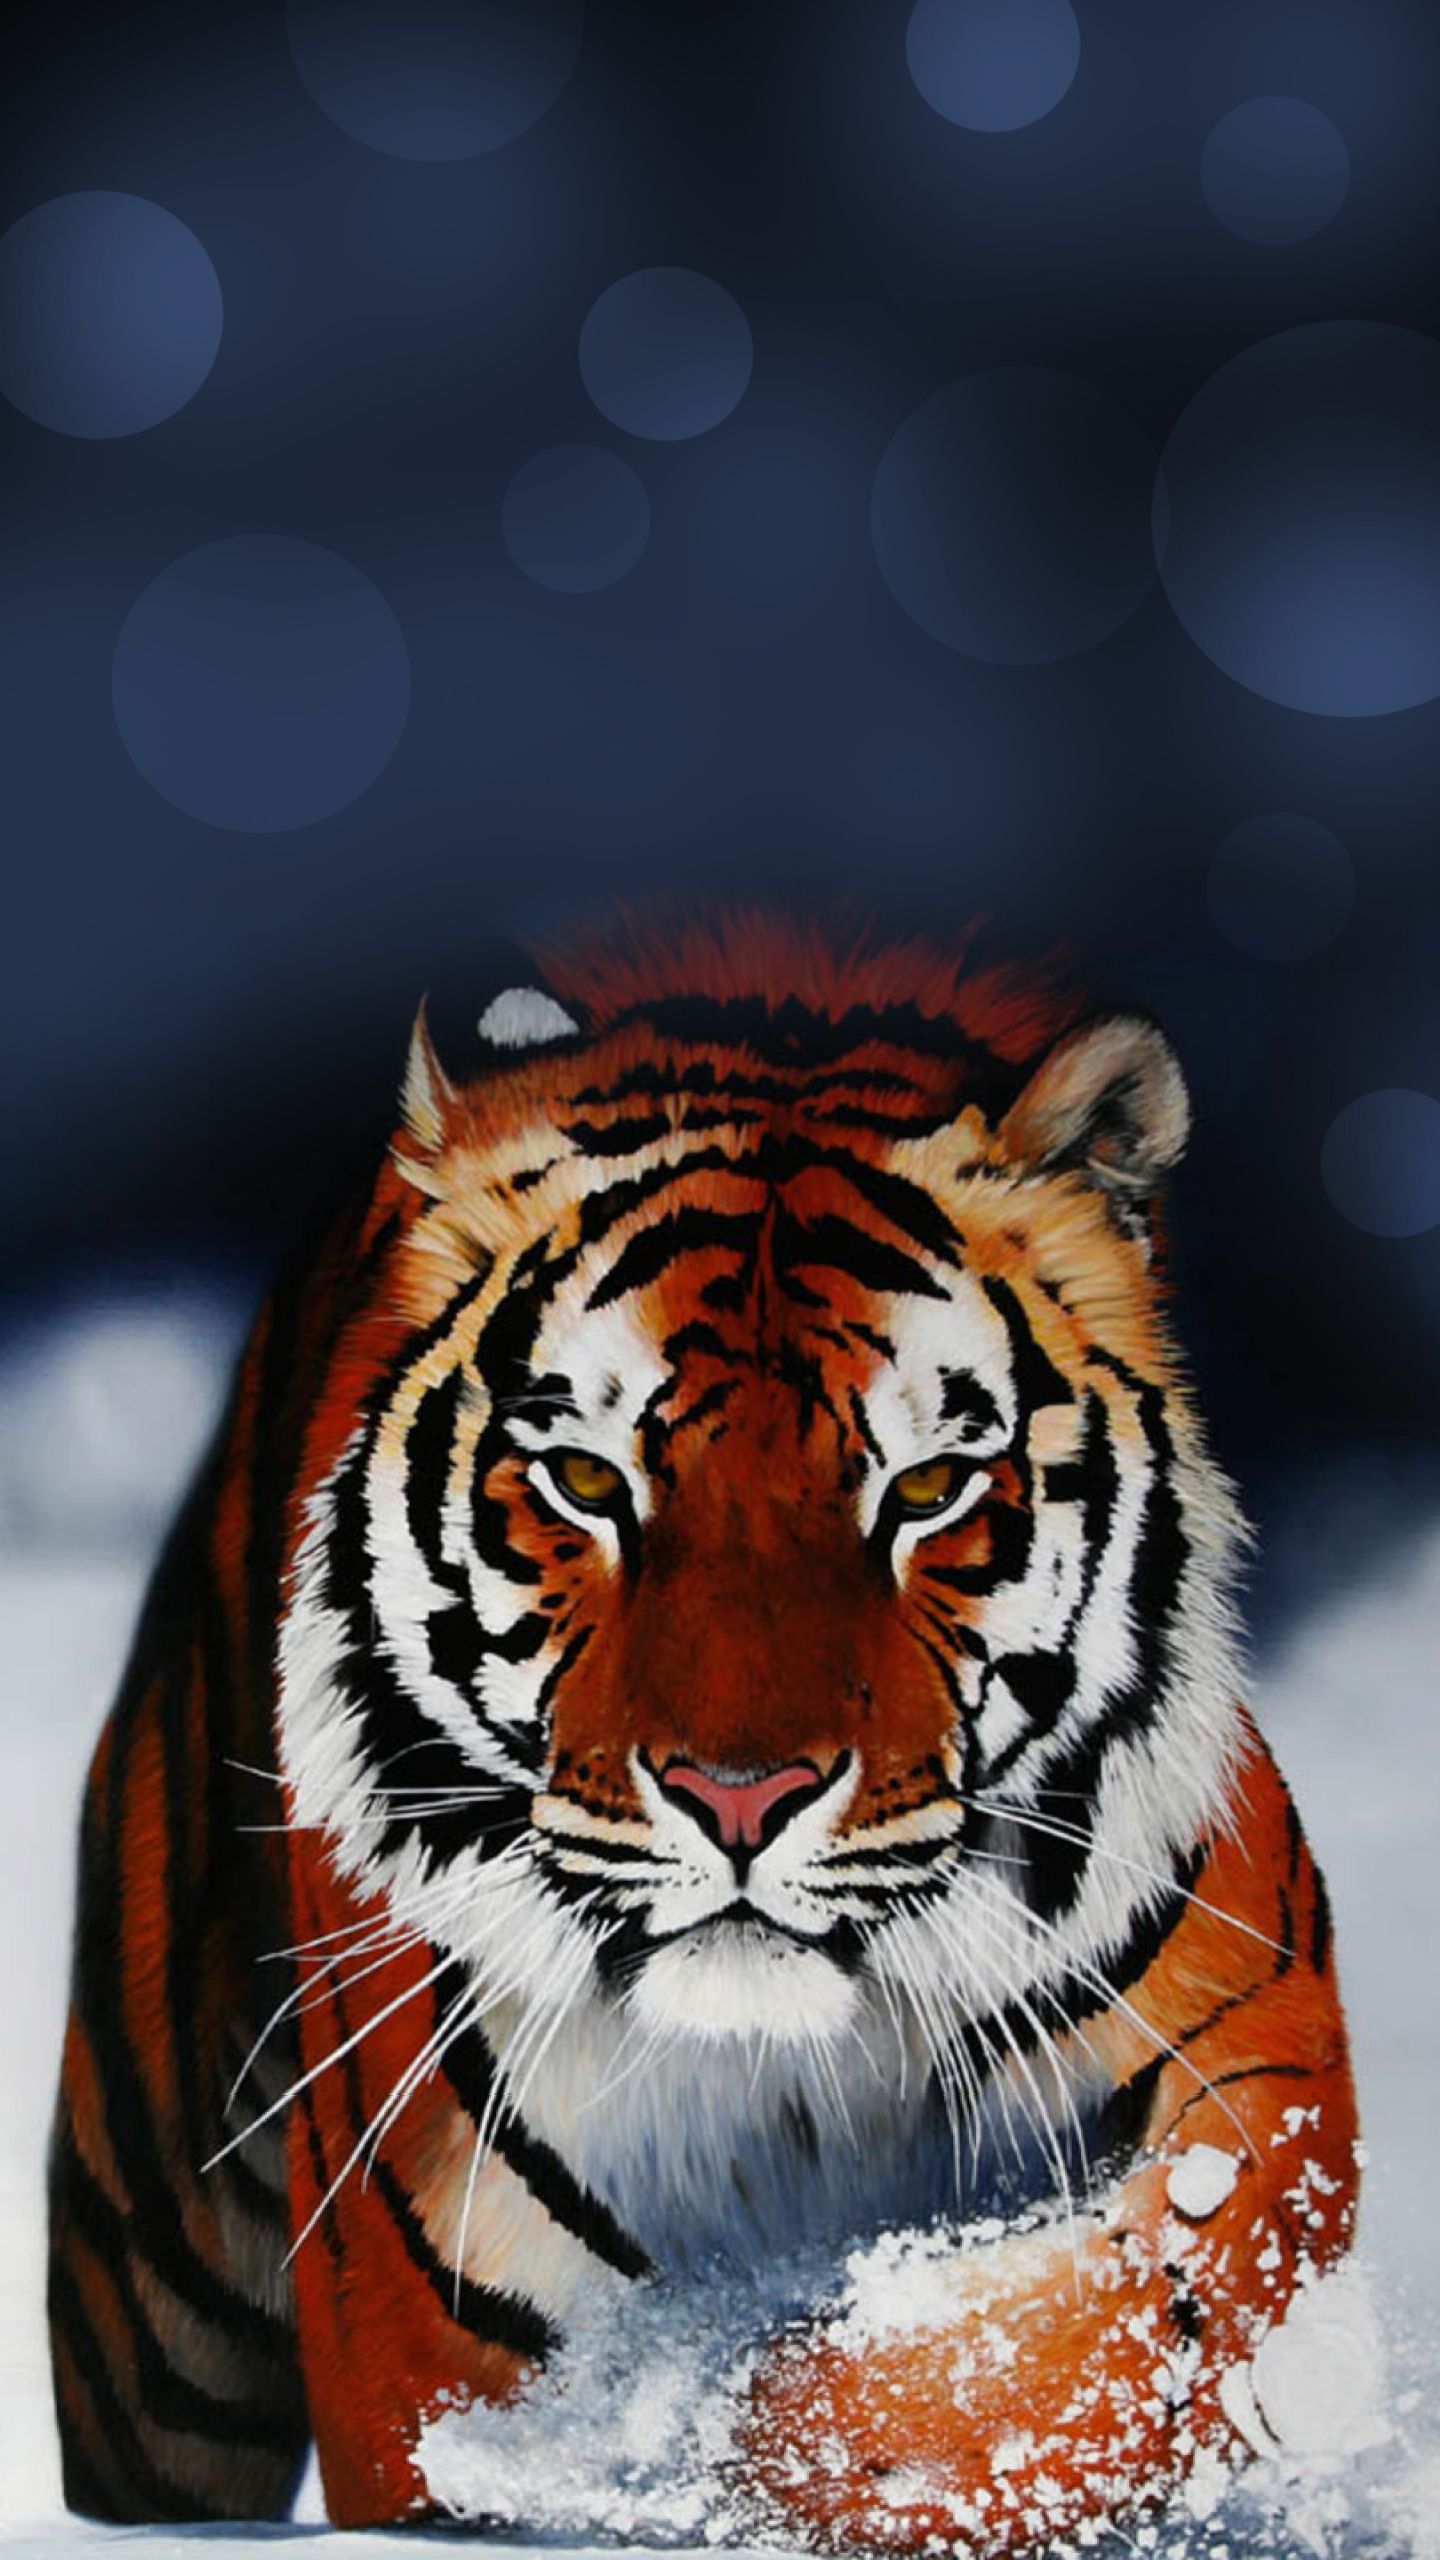 blackberry themes: Tiger Wallpaper Galaxy S7 Edge